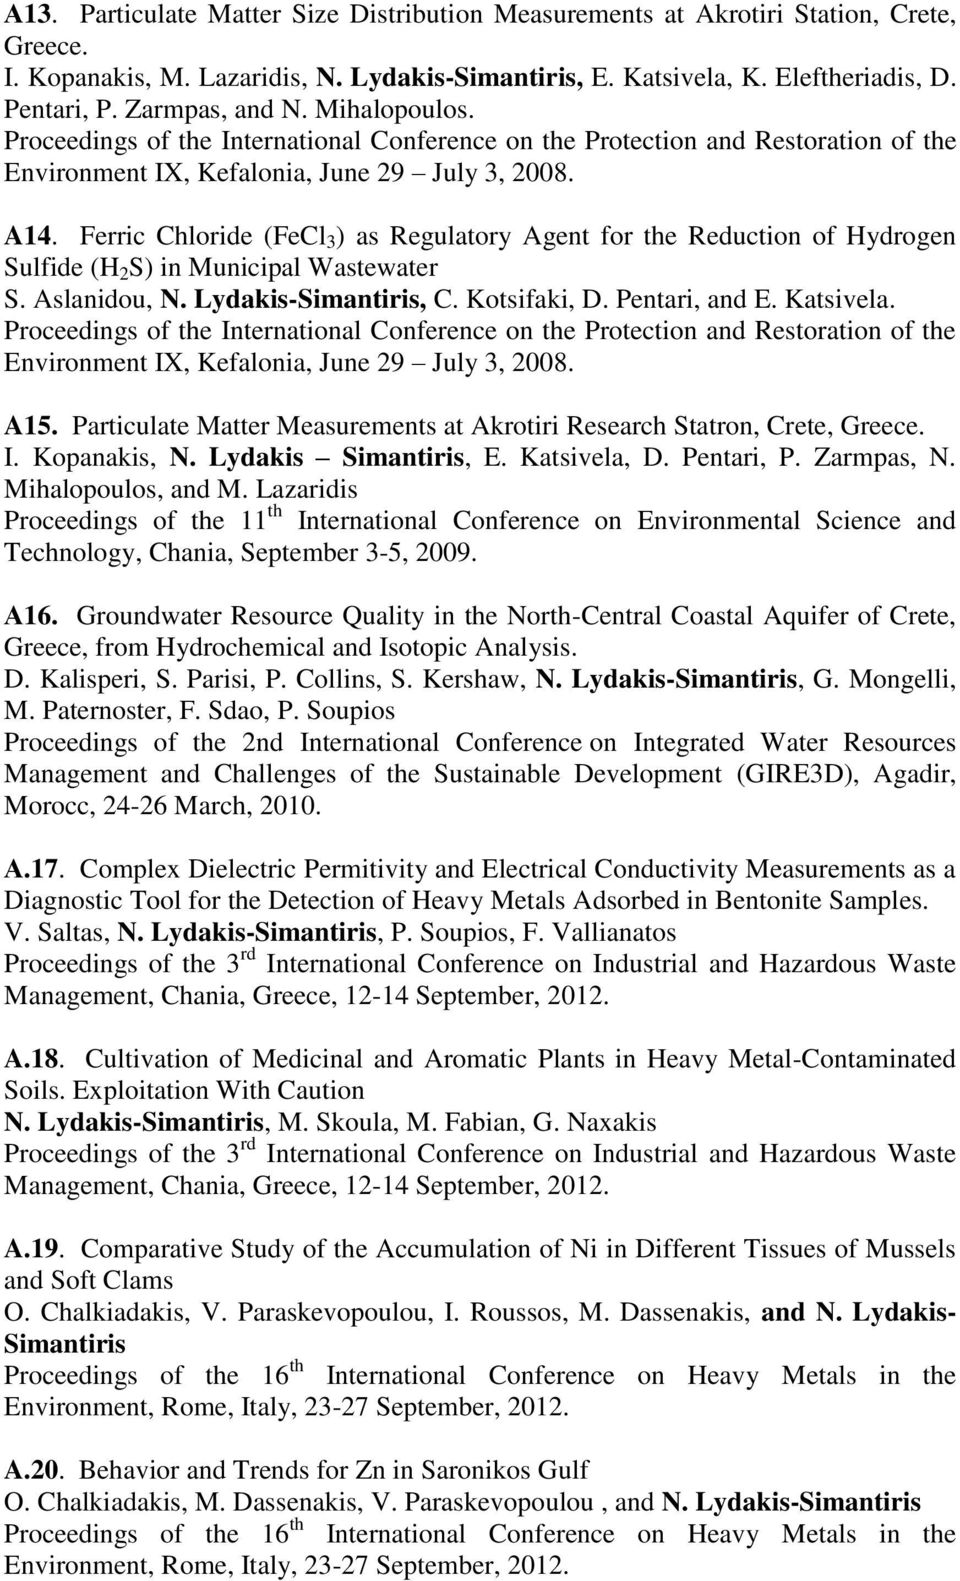 Ferric Chloride (FeCl 3 ) as Regulatory Agent for the Reduction of Hydrogen Sulfide (H 2 S) in Municipal Wastewater S. Aslanidou, N. Lydakis-Simantiris, C. Kotsifaki, D. Pentari, and E. Katsivela.